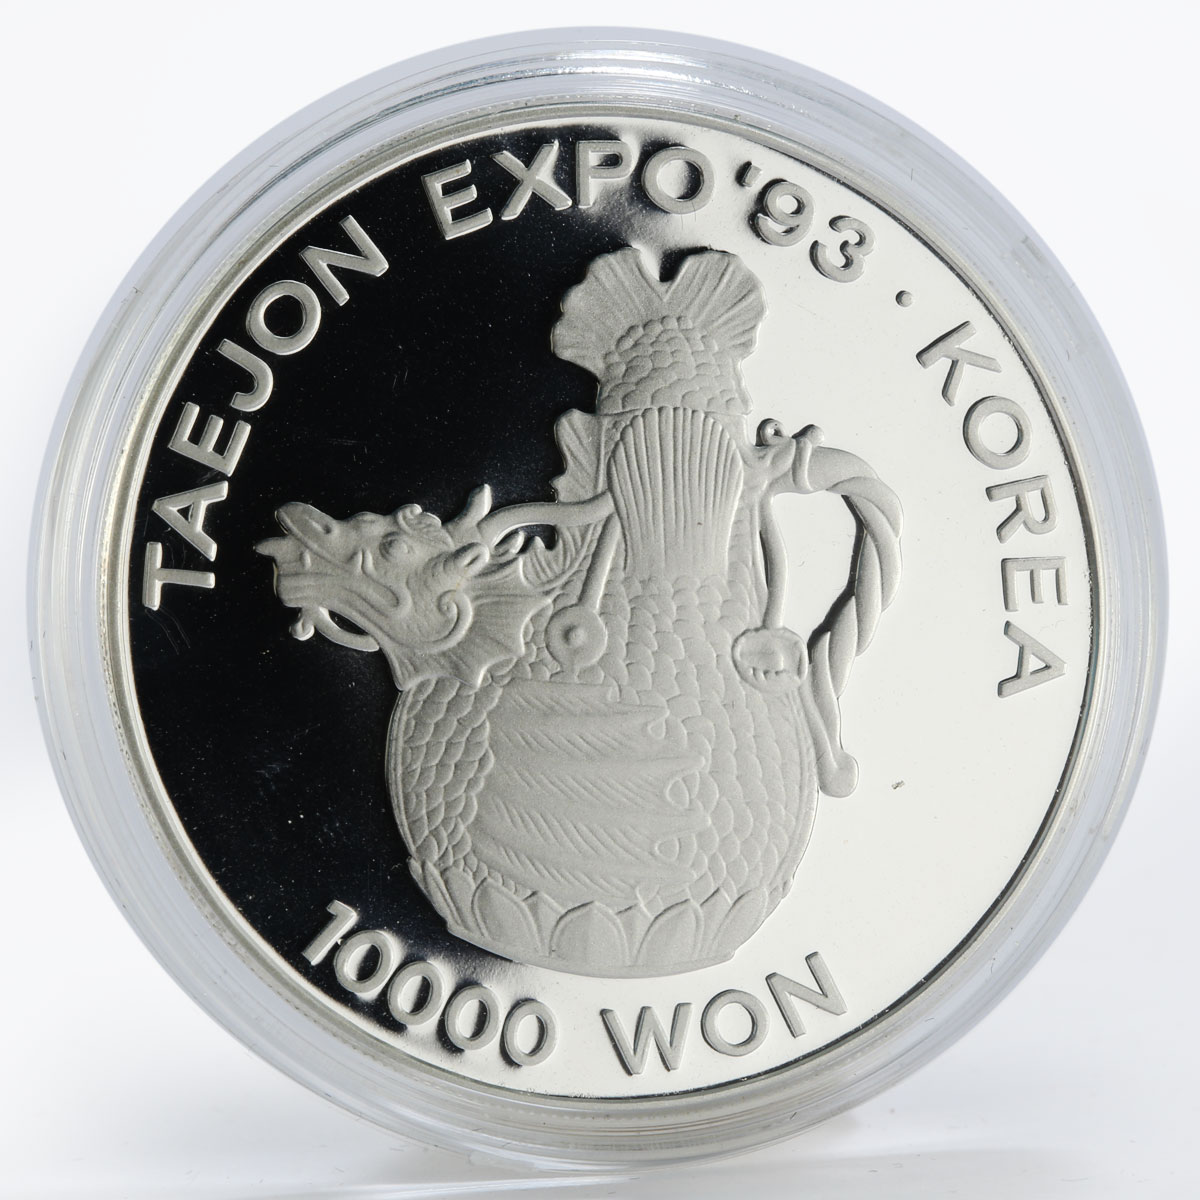 Korea set of 4 coins Taejon International Exposition proof silver coin 1993